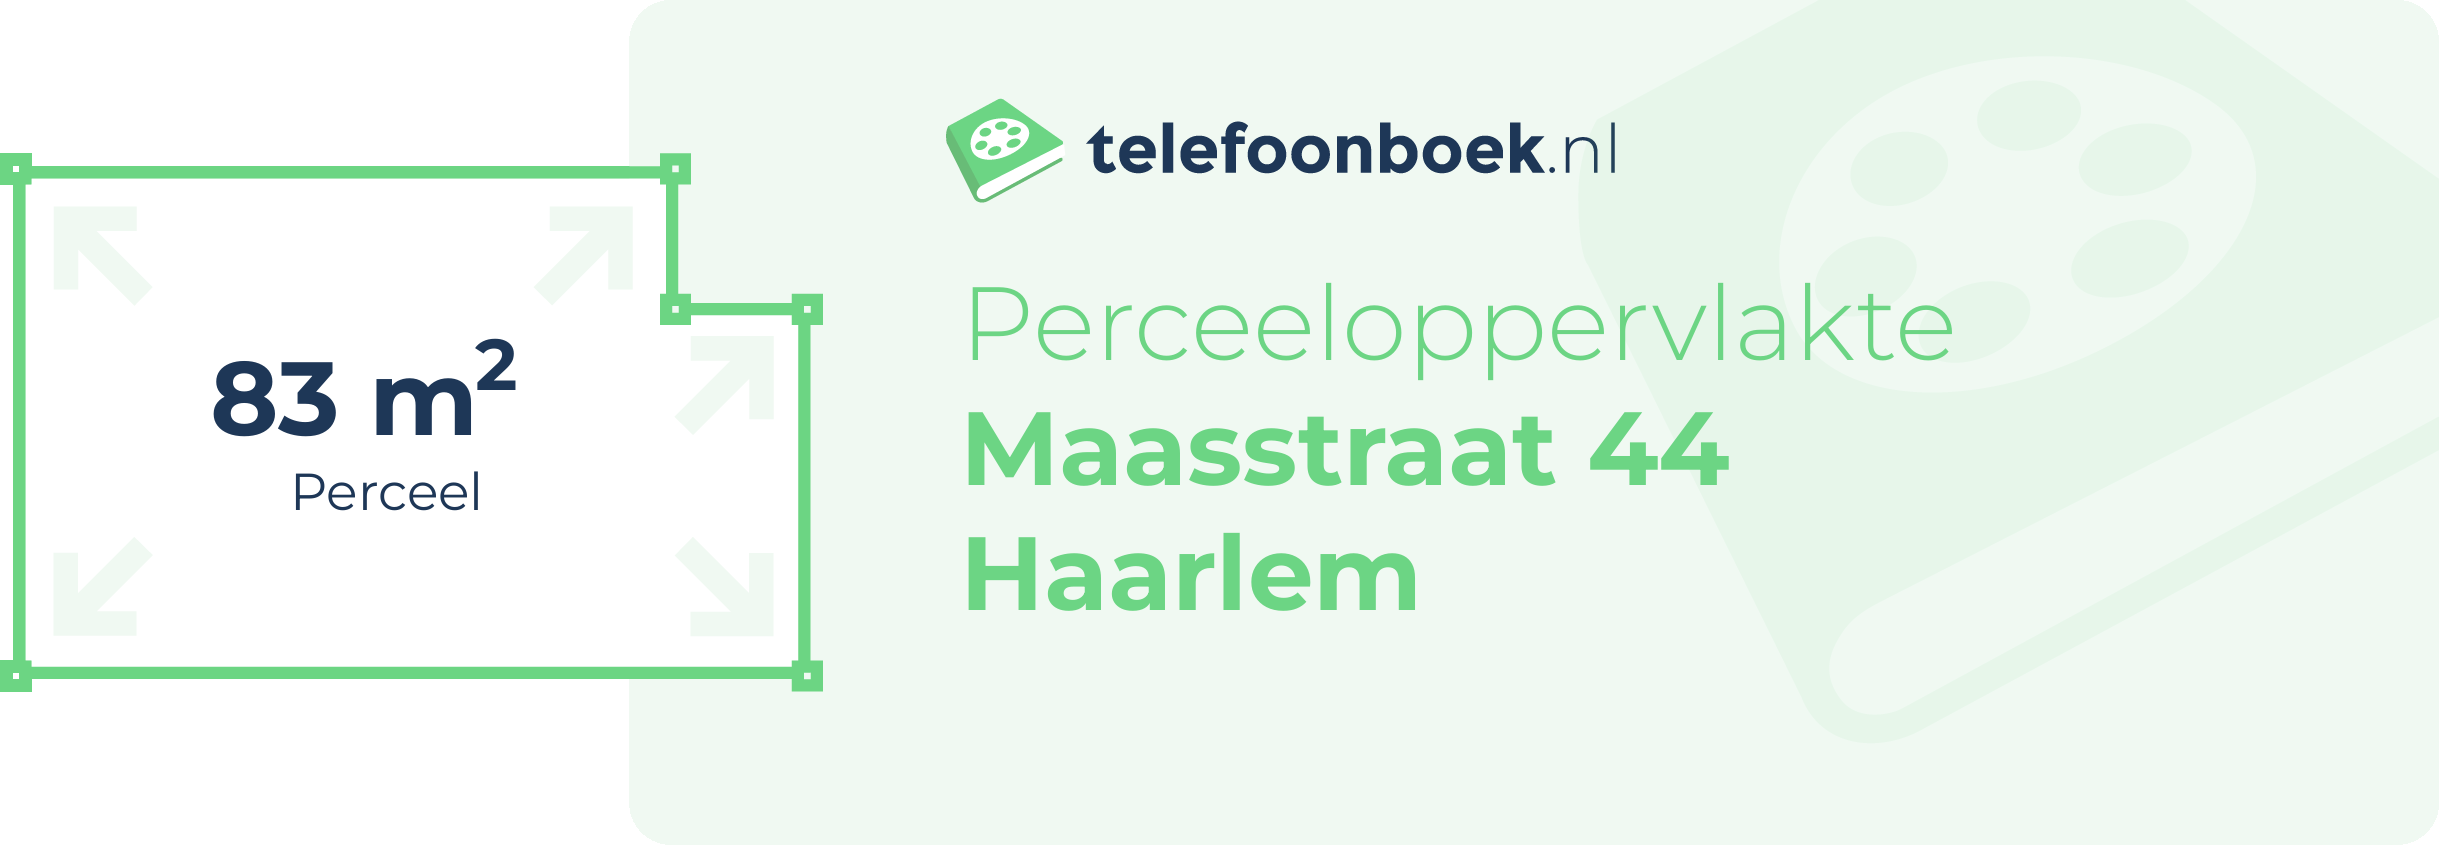 Perceeloppervlakte Maasstraat 44 Haarlem